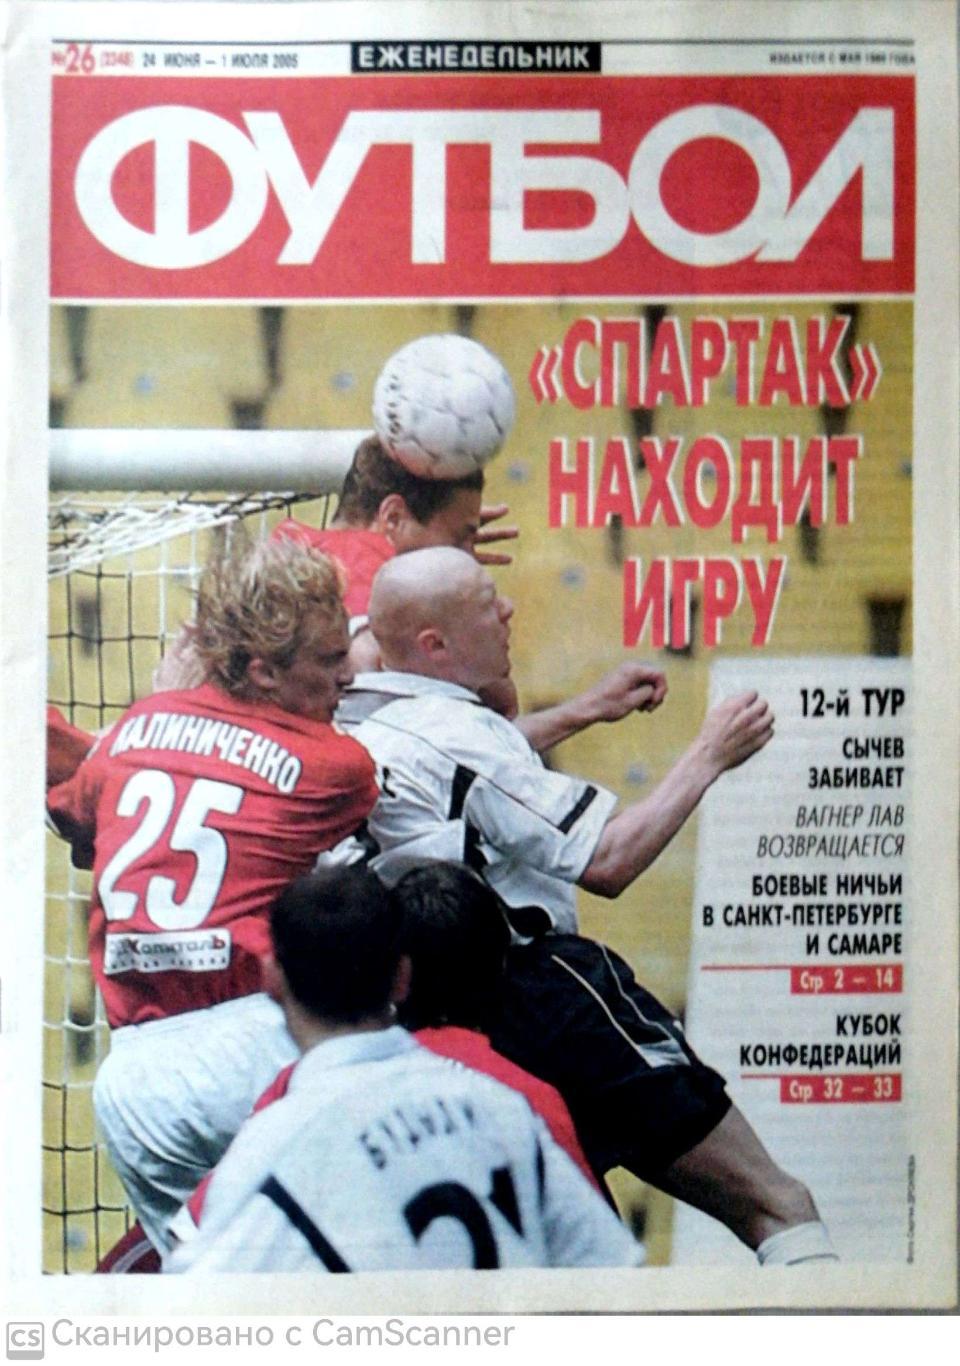 Еженедельник «Футбол» (Москва). 2005 год. №26